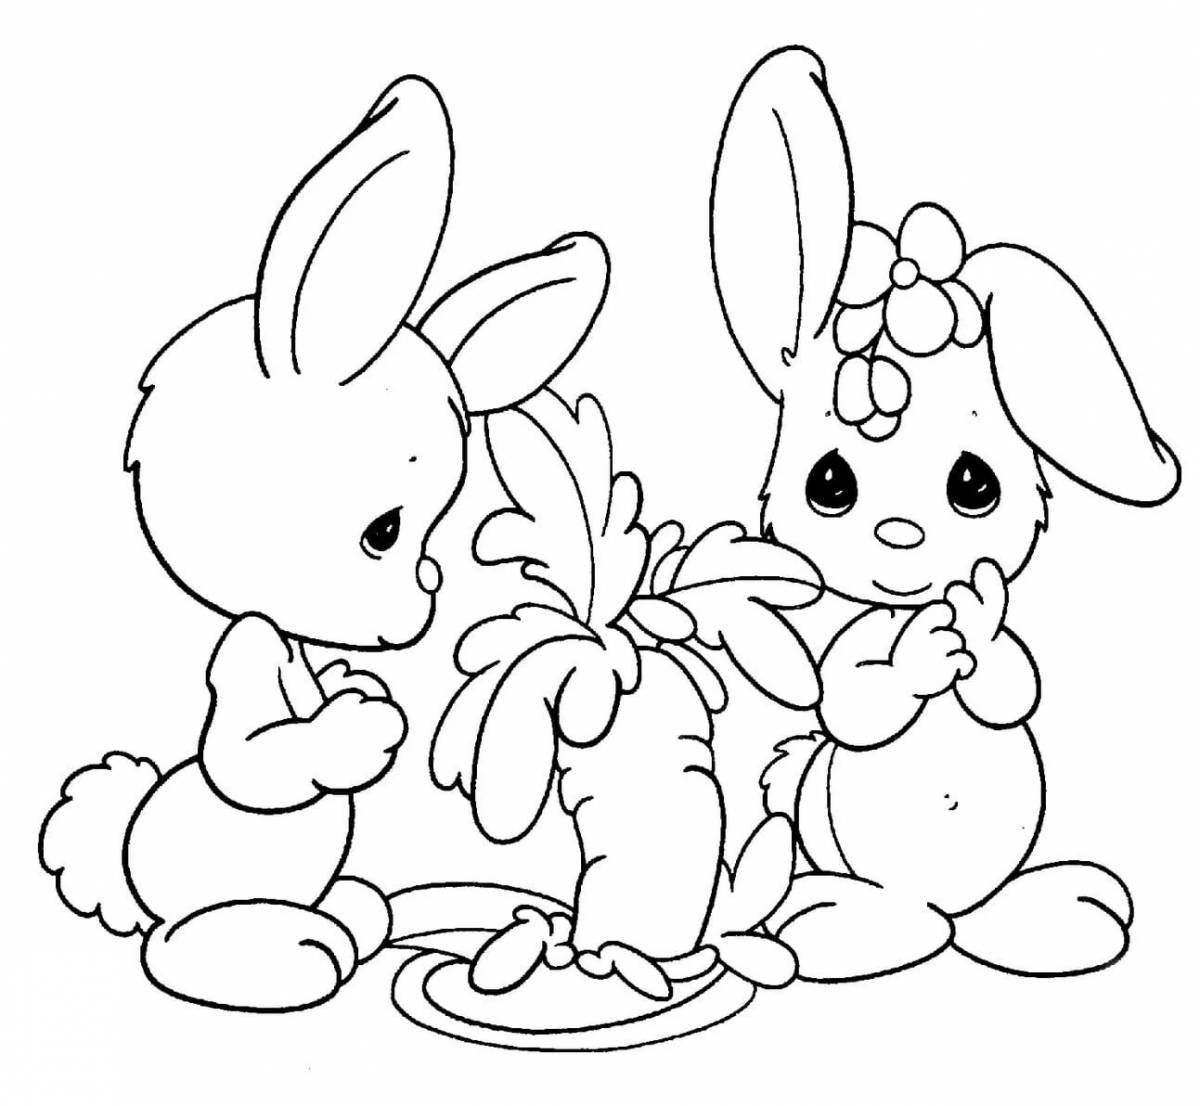 Joyful bunny coloring